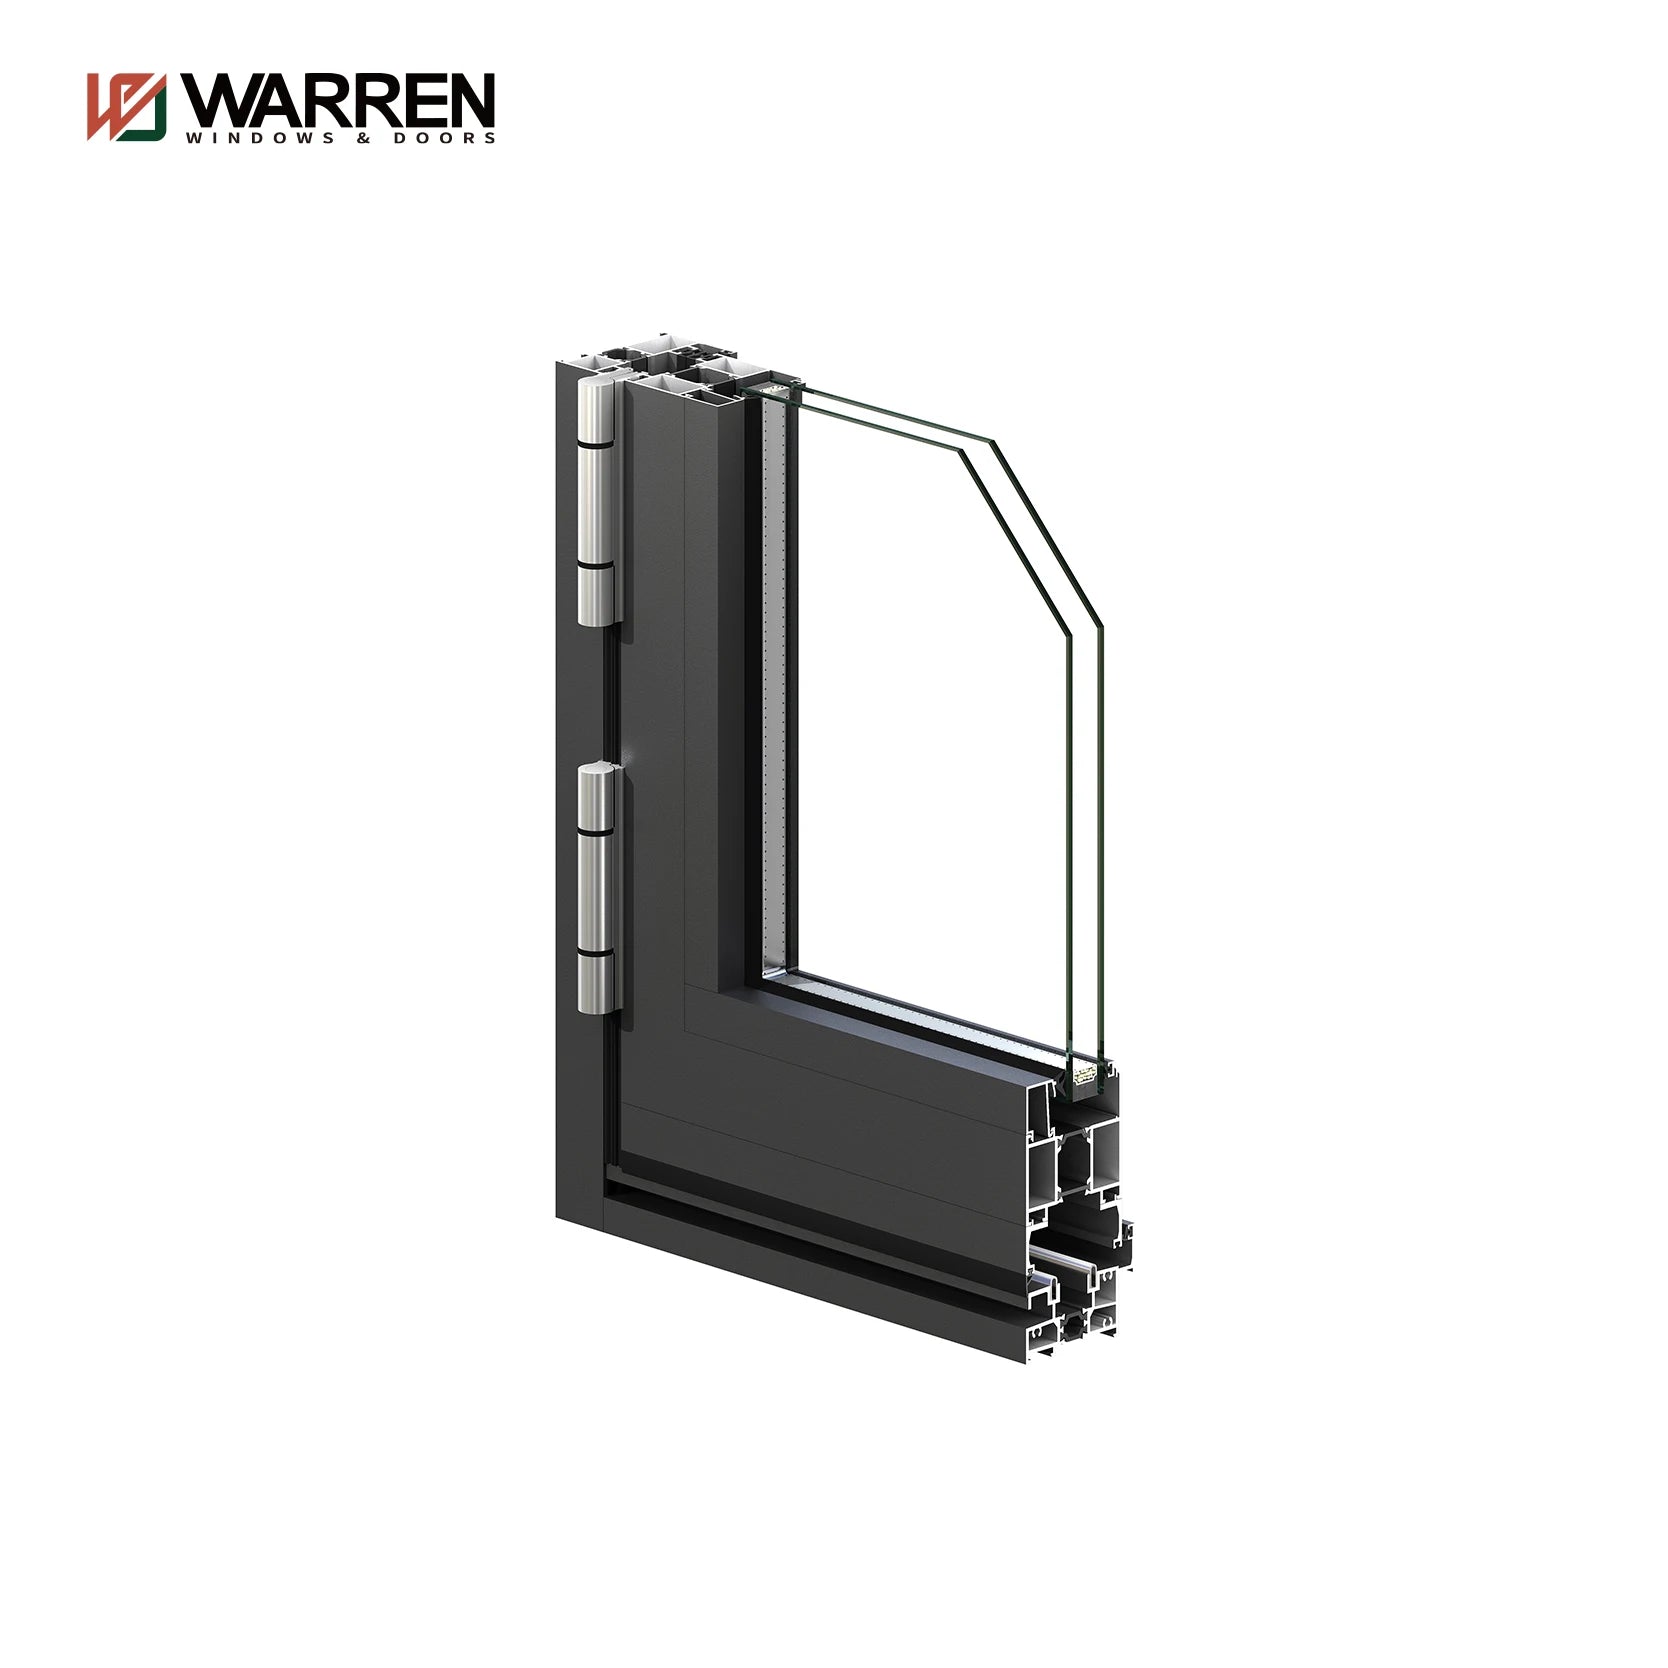 Warren 36x80 Bi Fold Doors 30 Bifold Doors Bifold Door 30x80 Folding Aluminum Patio Glass